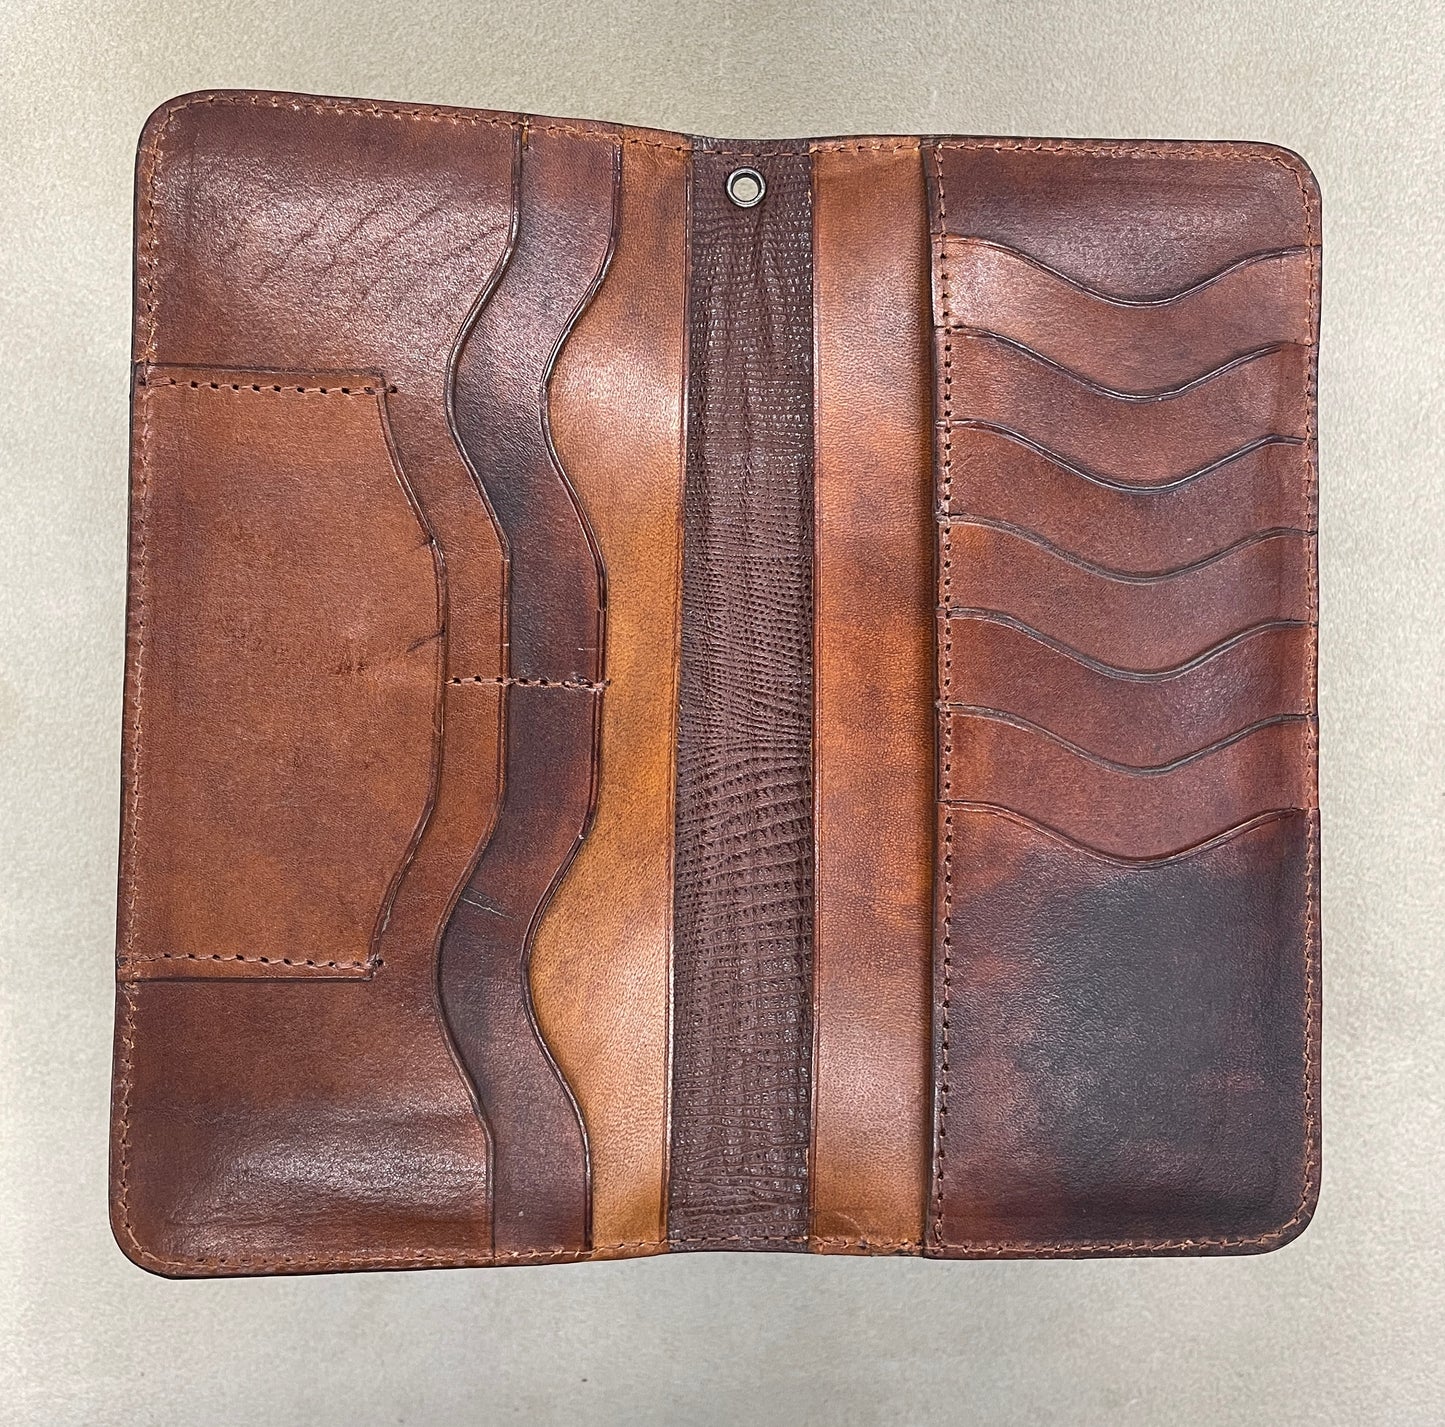 Wunderteam Leather Wallet